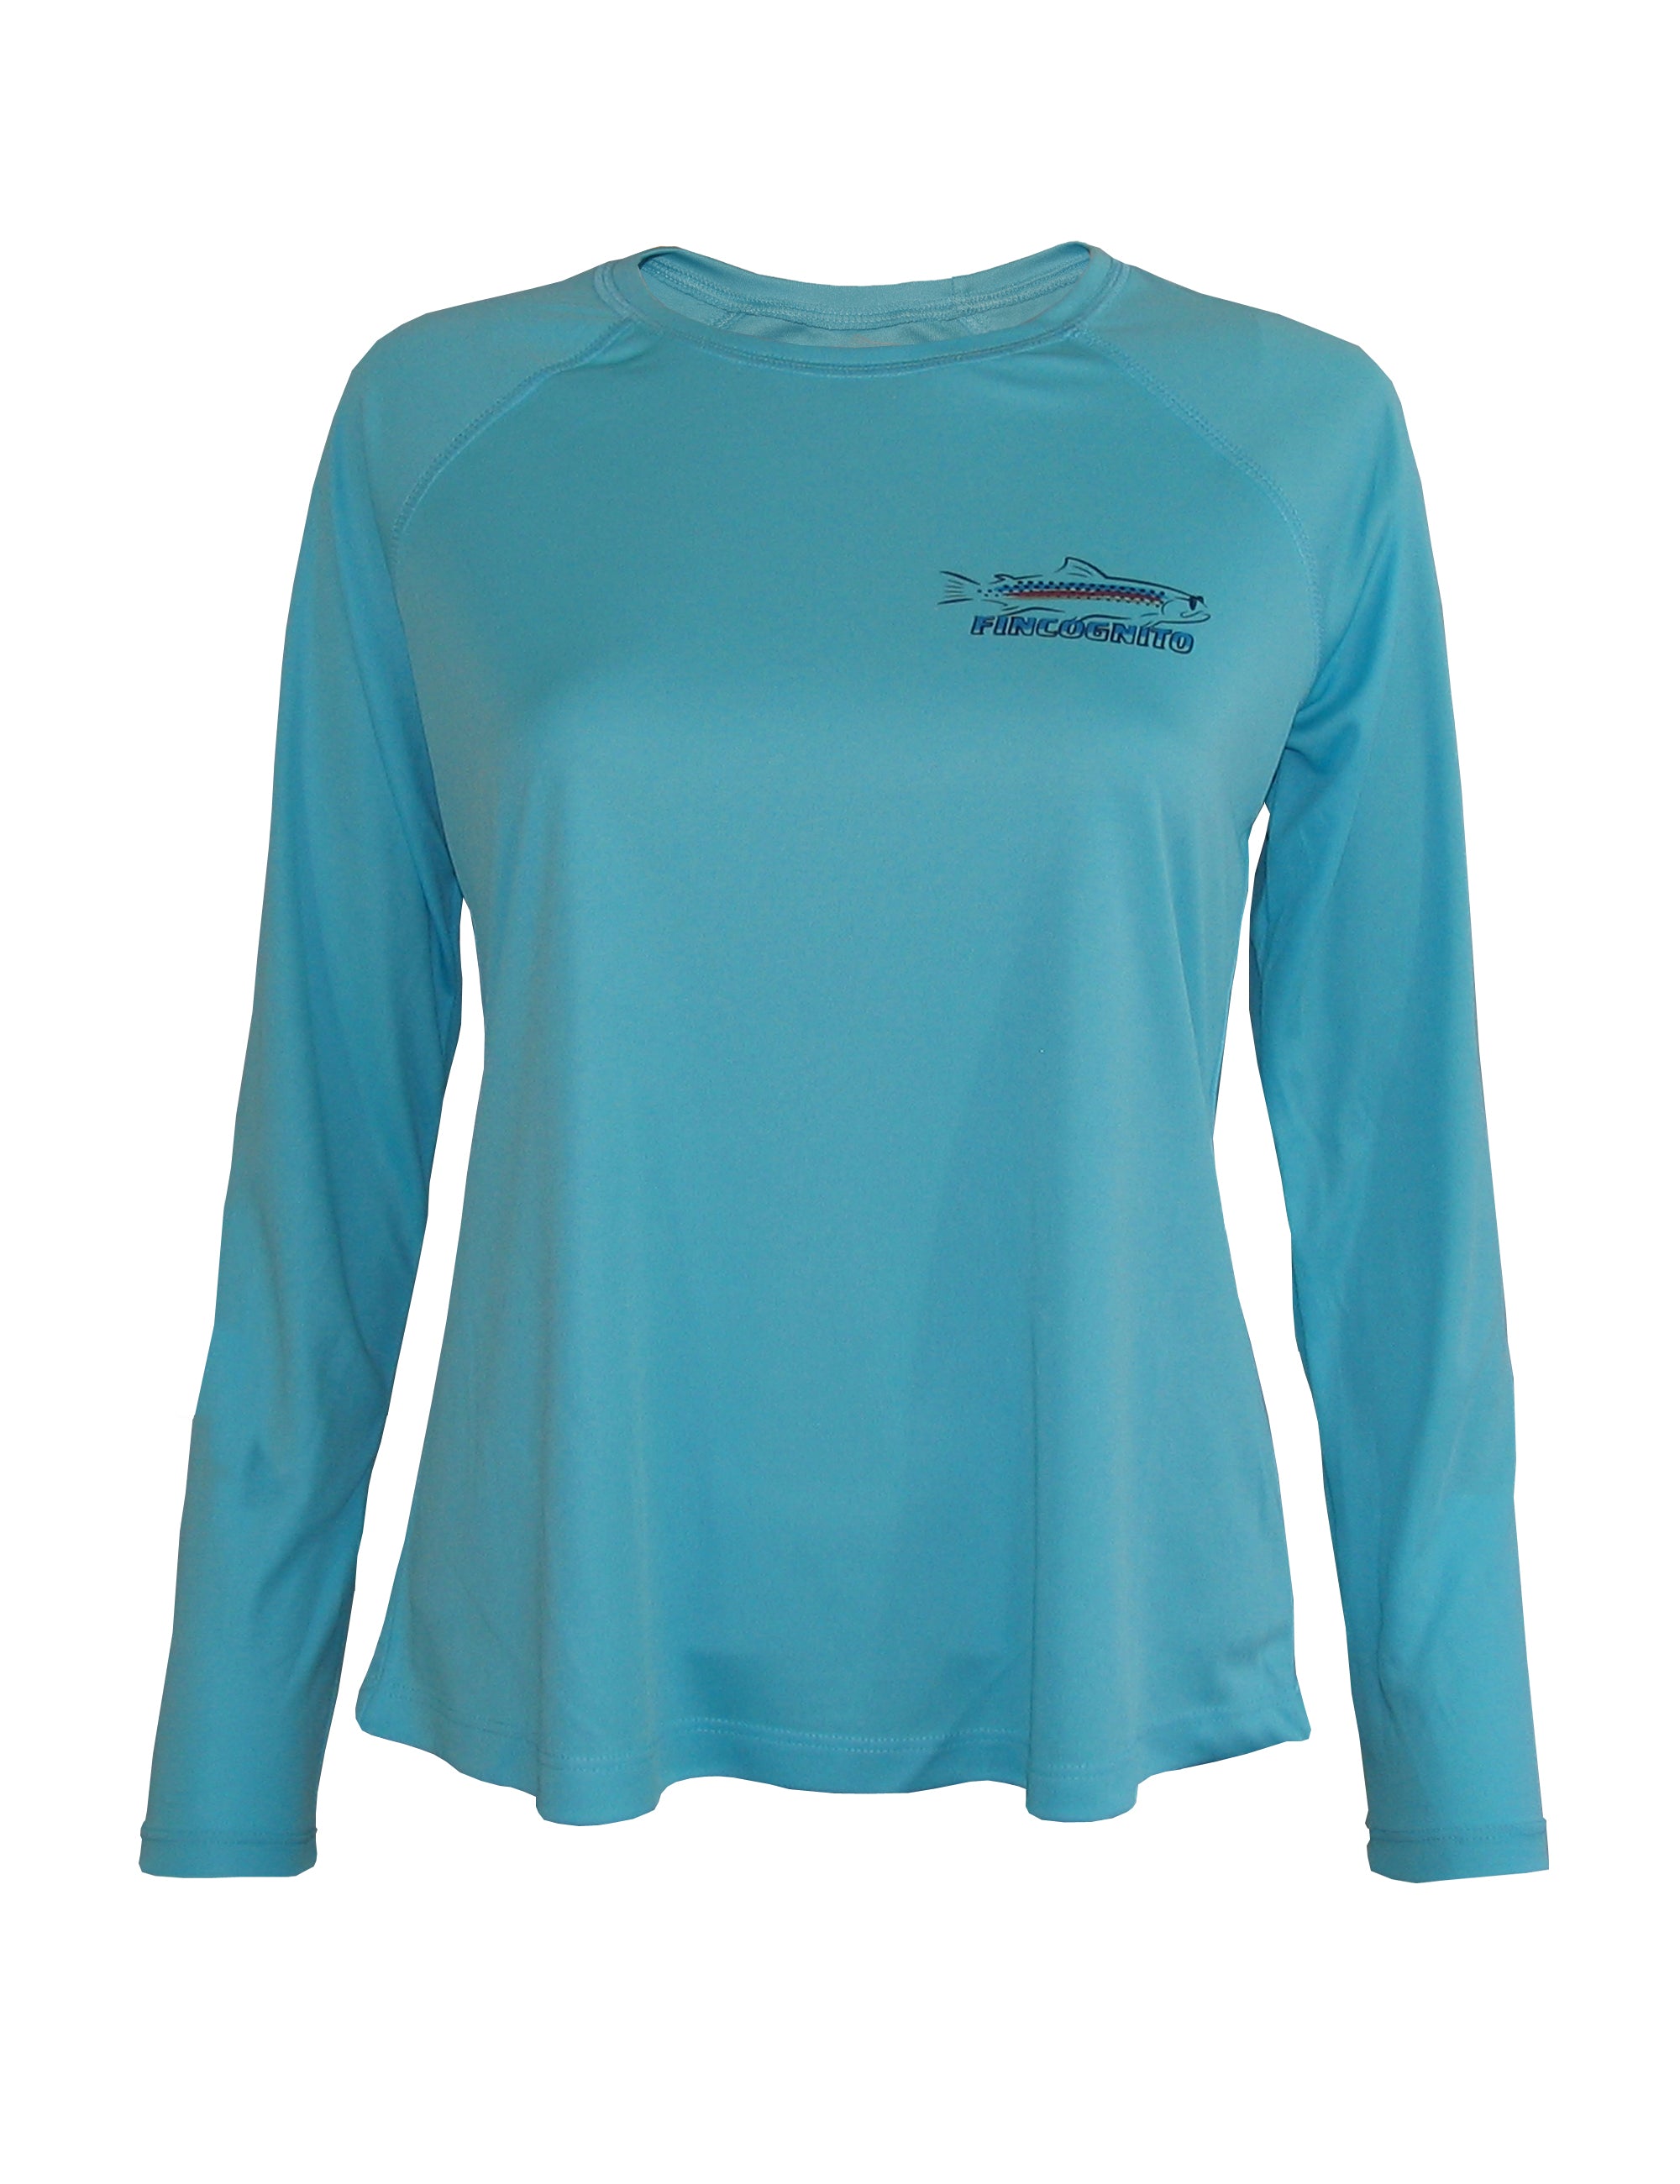 ZELOS, Shirts, Zelos Heathered Blue Lightweight Breezy Navy Stripe Active  Running Tshirt Top